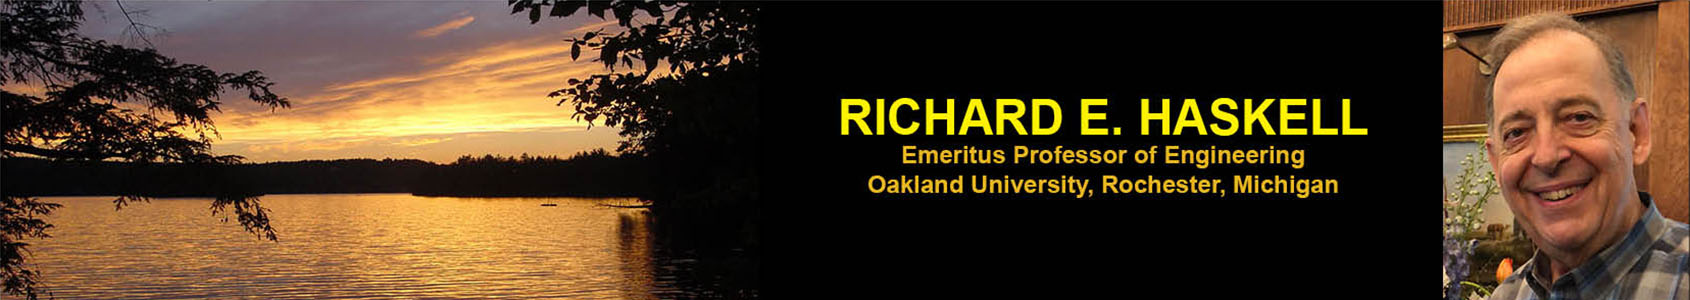 Richard E Haskell, Emeritus Professor of Engineering, Oakland University, Rochester, Michigan. Lake image and portrait by Keith Eveland